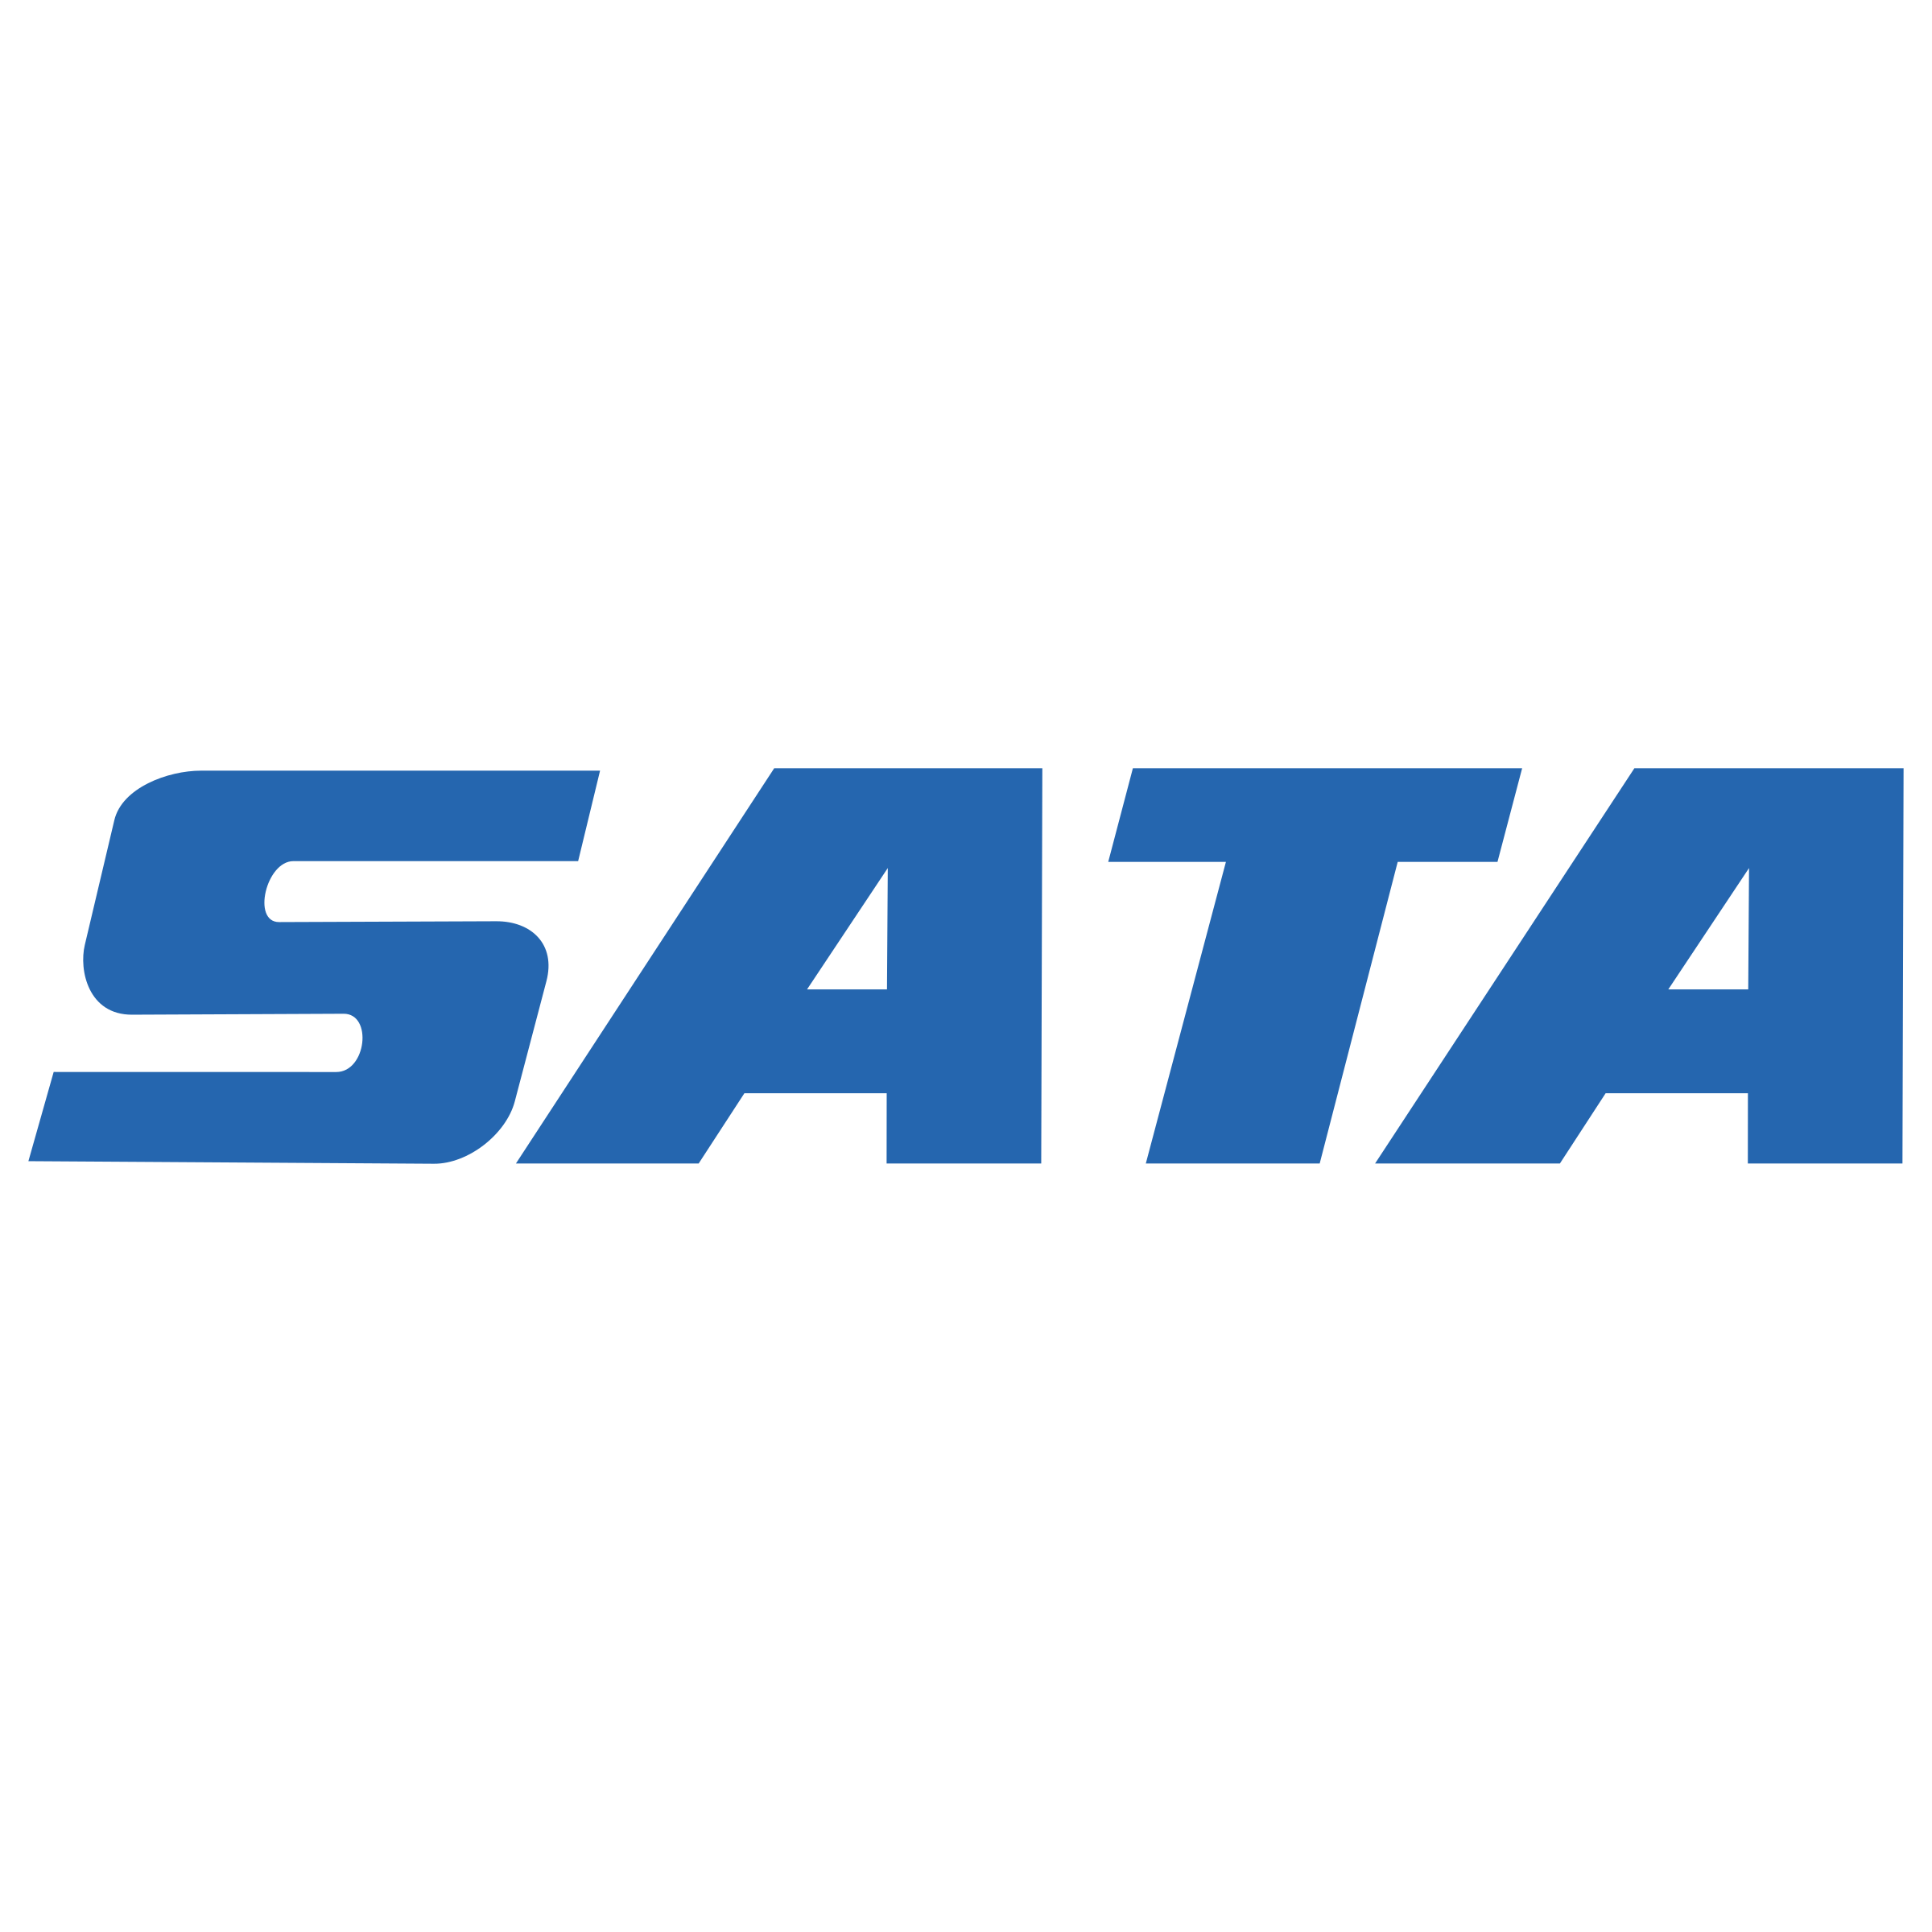 SATA Logo - Sata Logo PNG Transparent & SVG Vector